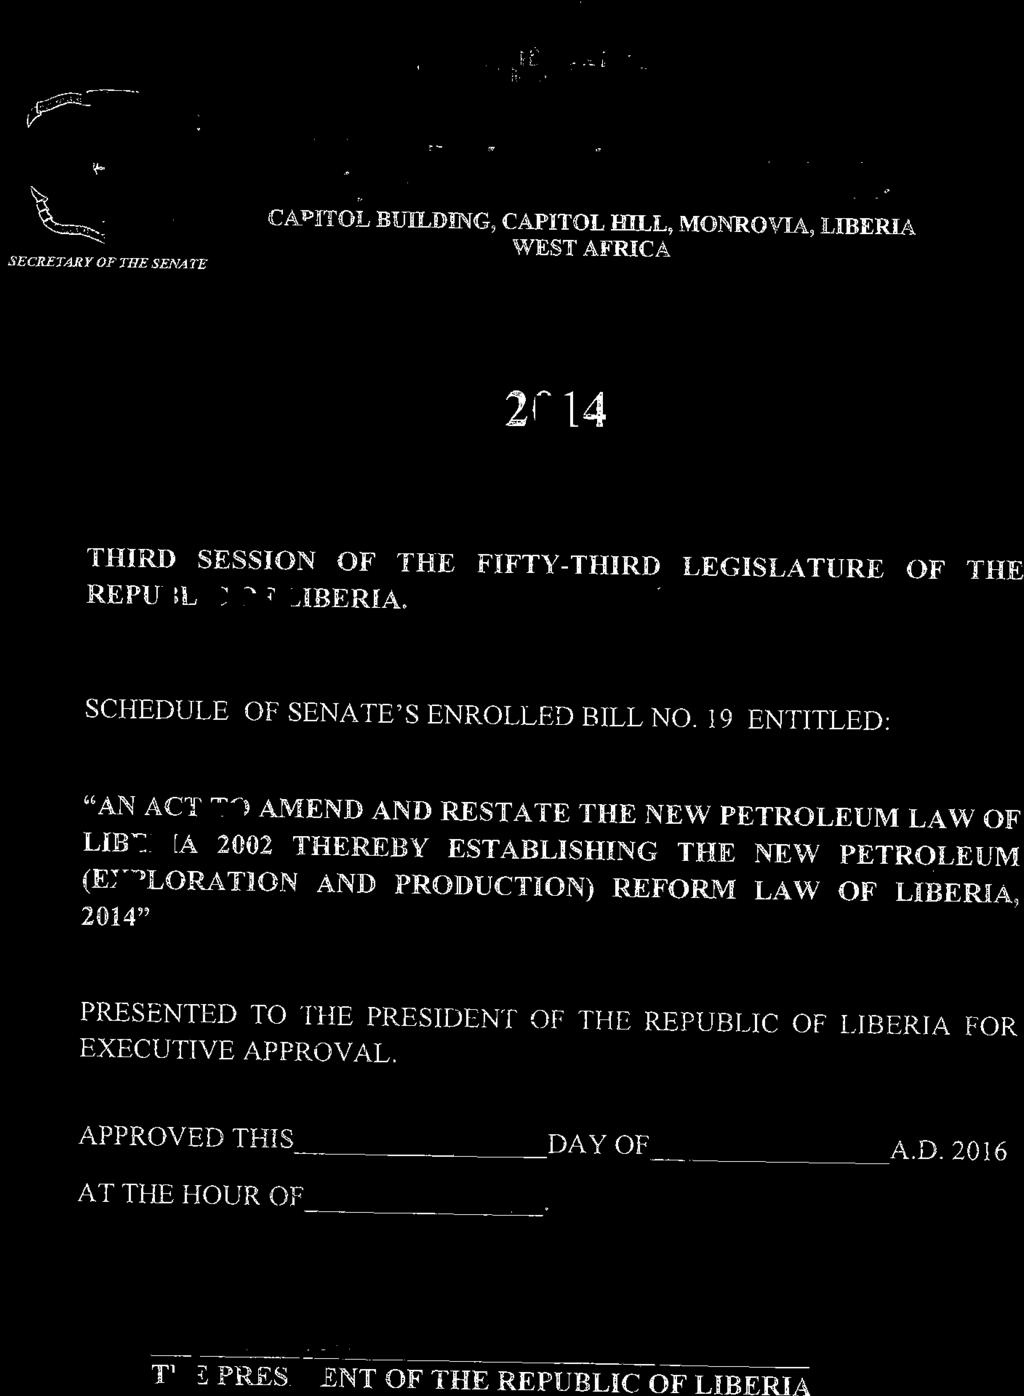 FIFTY-THIRD LEGISLATURE OF THE REPURLIC LIBERIA. SCHEDULE OF SENATE'S ENROLLED BILL NO.